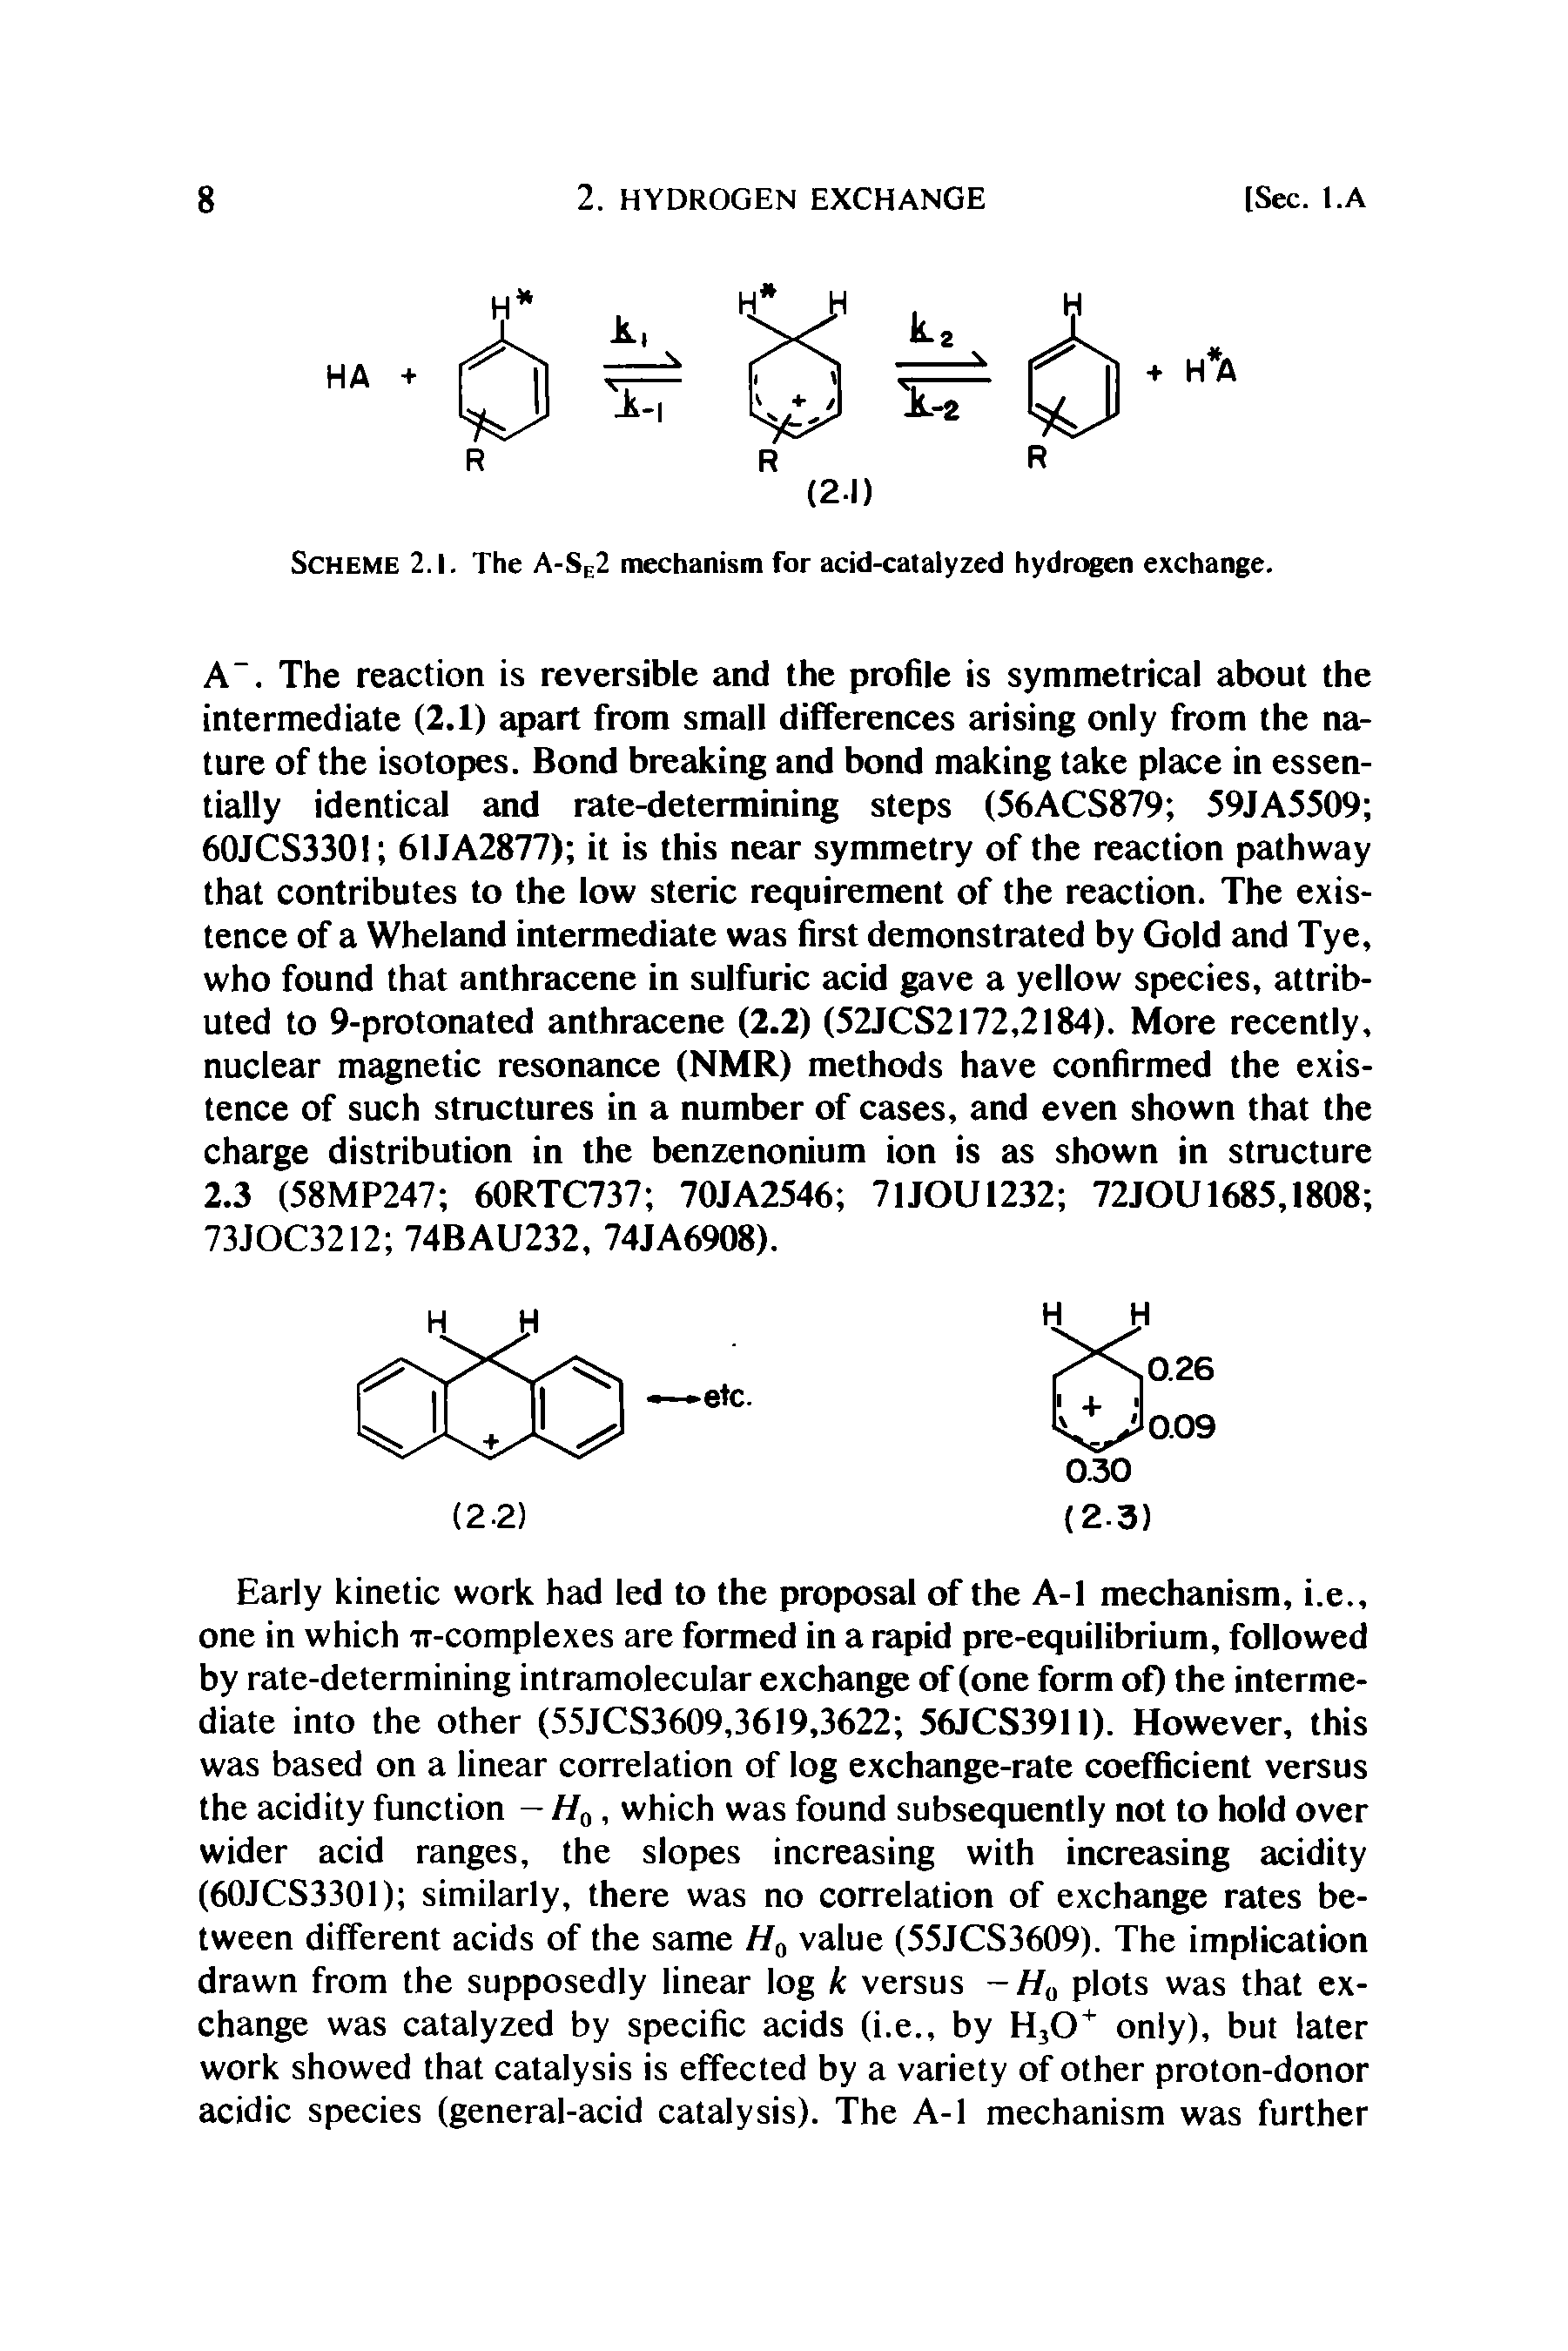 Scheme 2.1. The A-SE2 mechanism for acid-catalyzed hydrogen exchange.